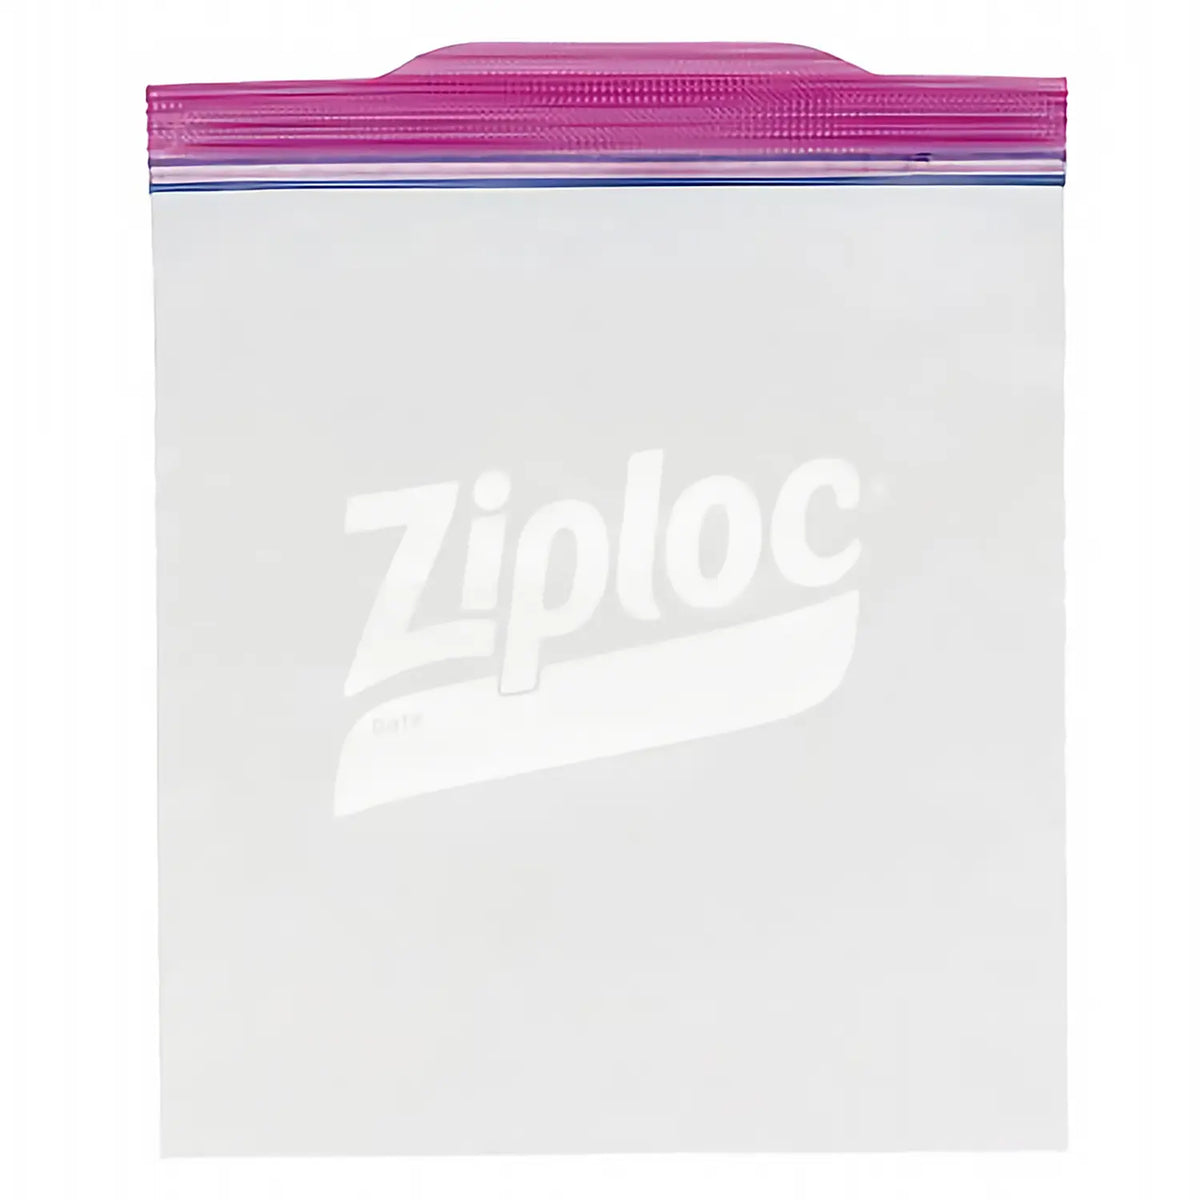 ZIPLOC EXTRA SMALL CONTAINERS, Tableware & Serveware